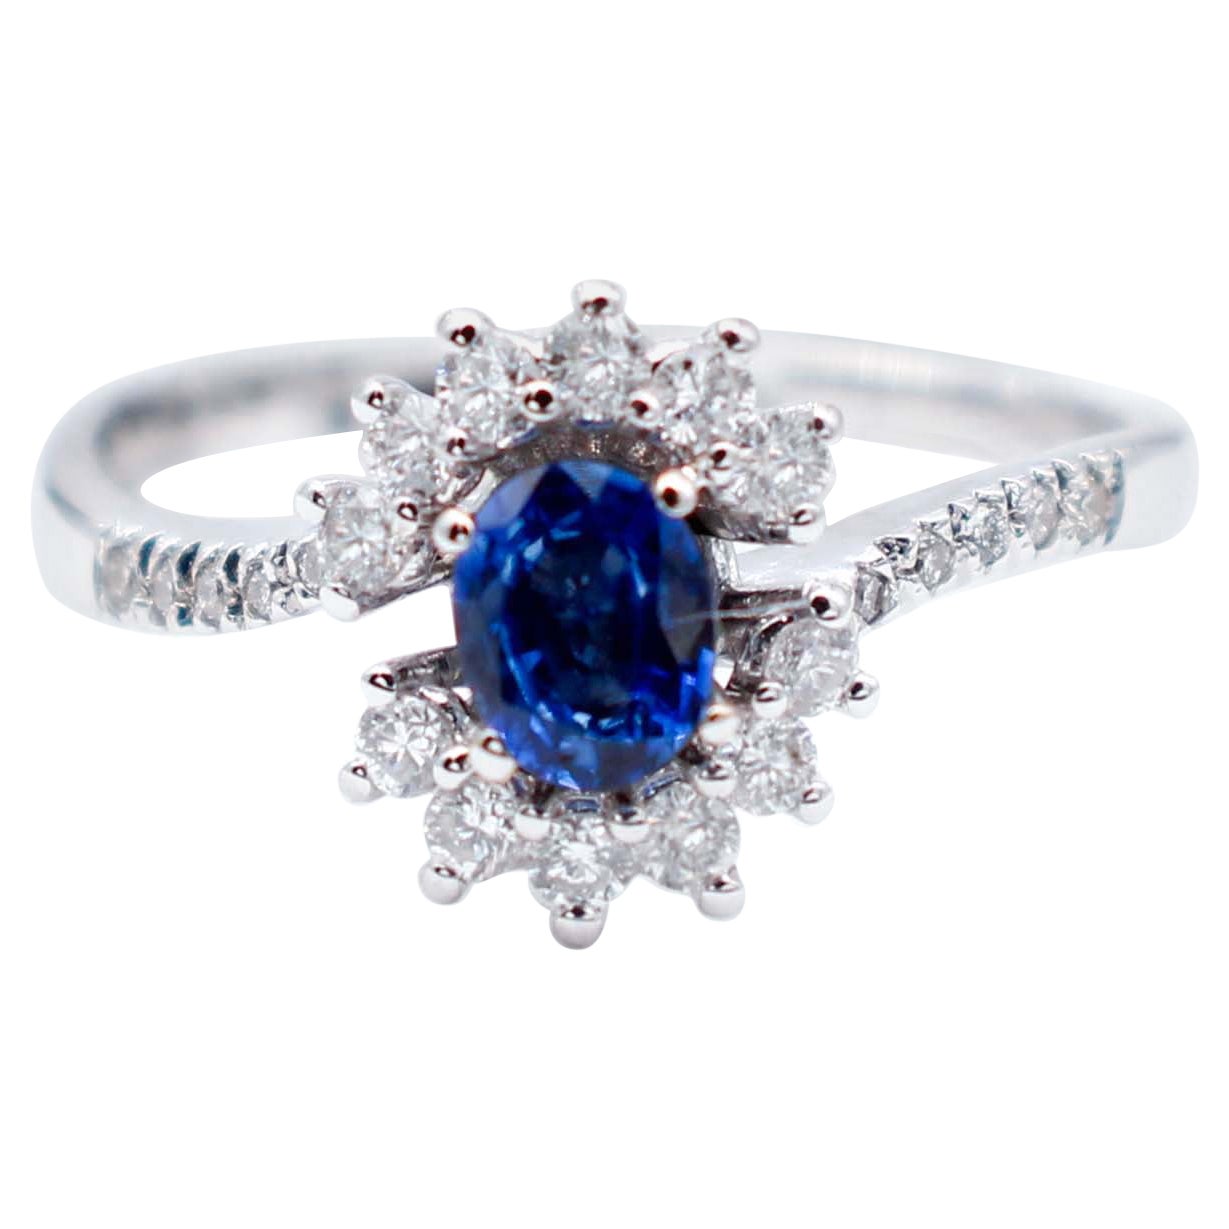 Blue Sapphire, White Diamonds, 18 Karat White Gold Engagement Ring